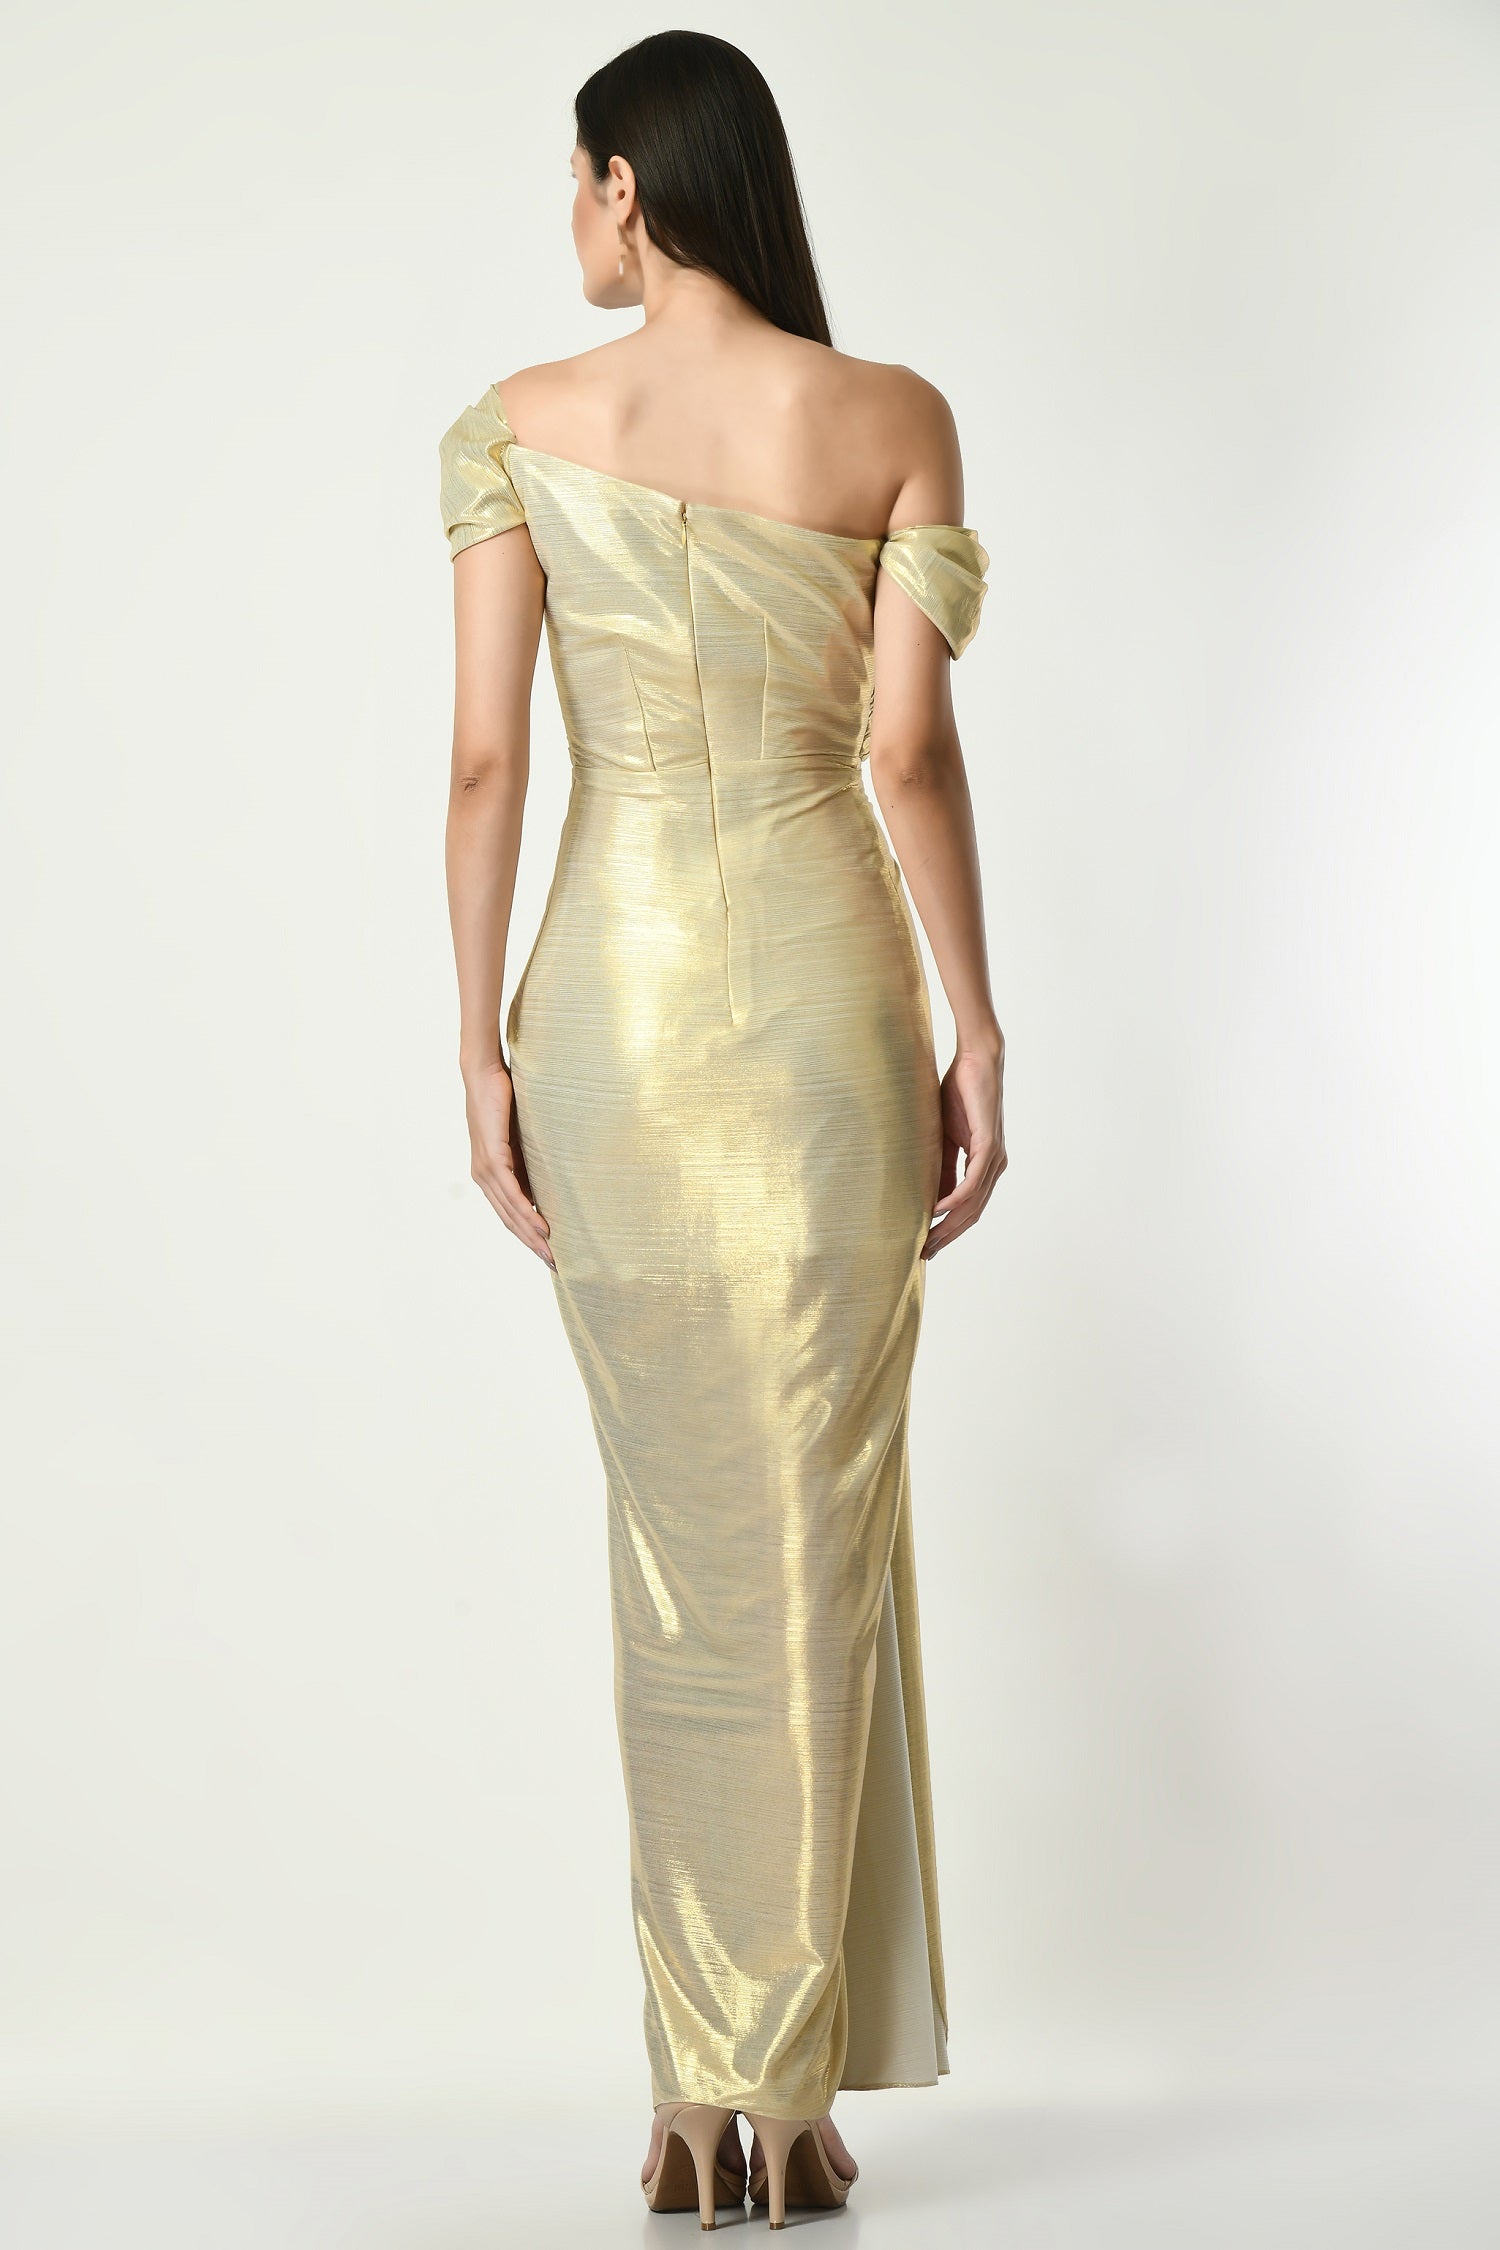 Kareena Kapoor Glows in a Timeless, designer Ralph Lauren golden gown. Take  a look!